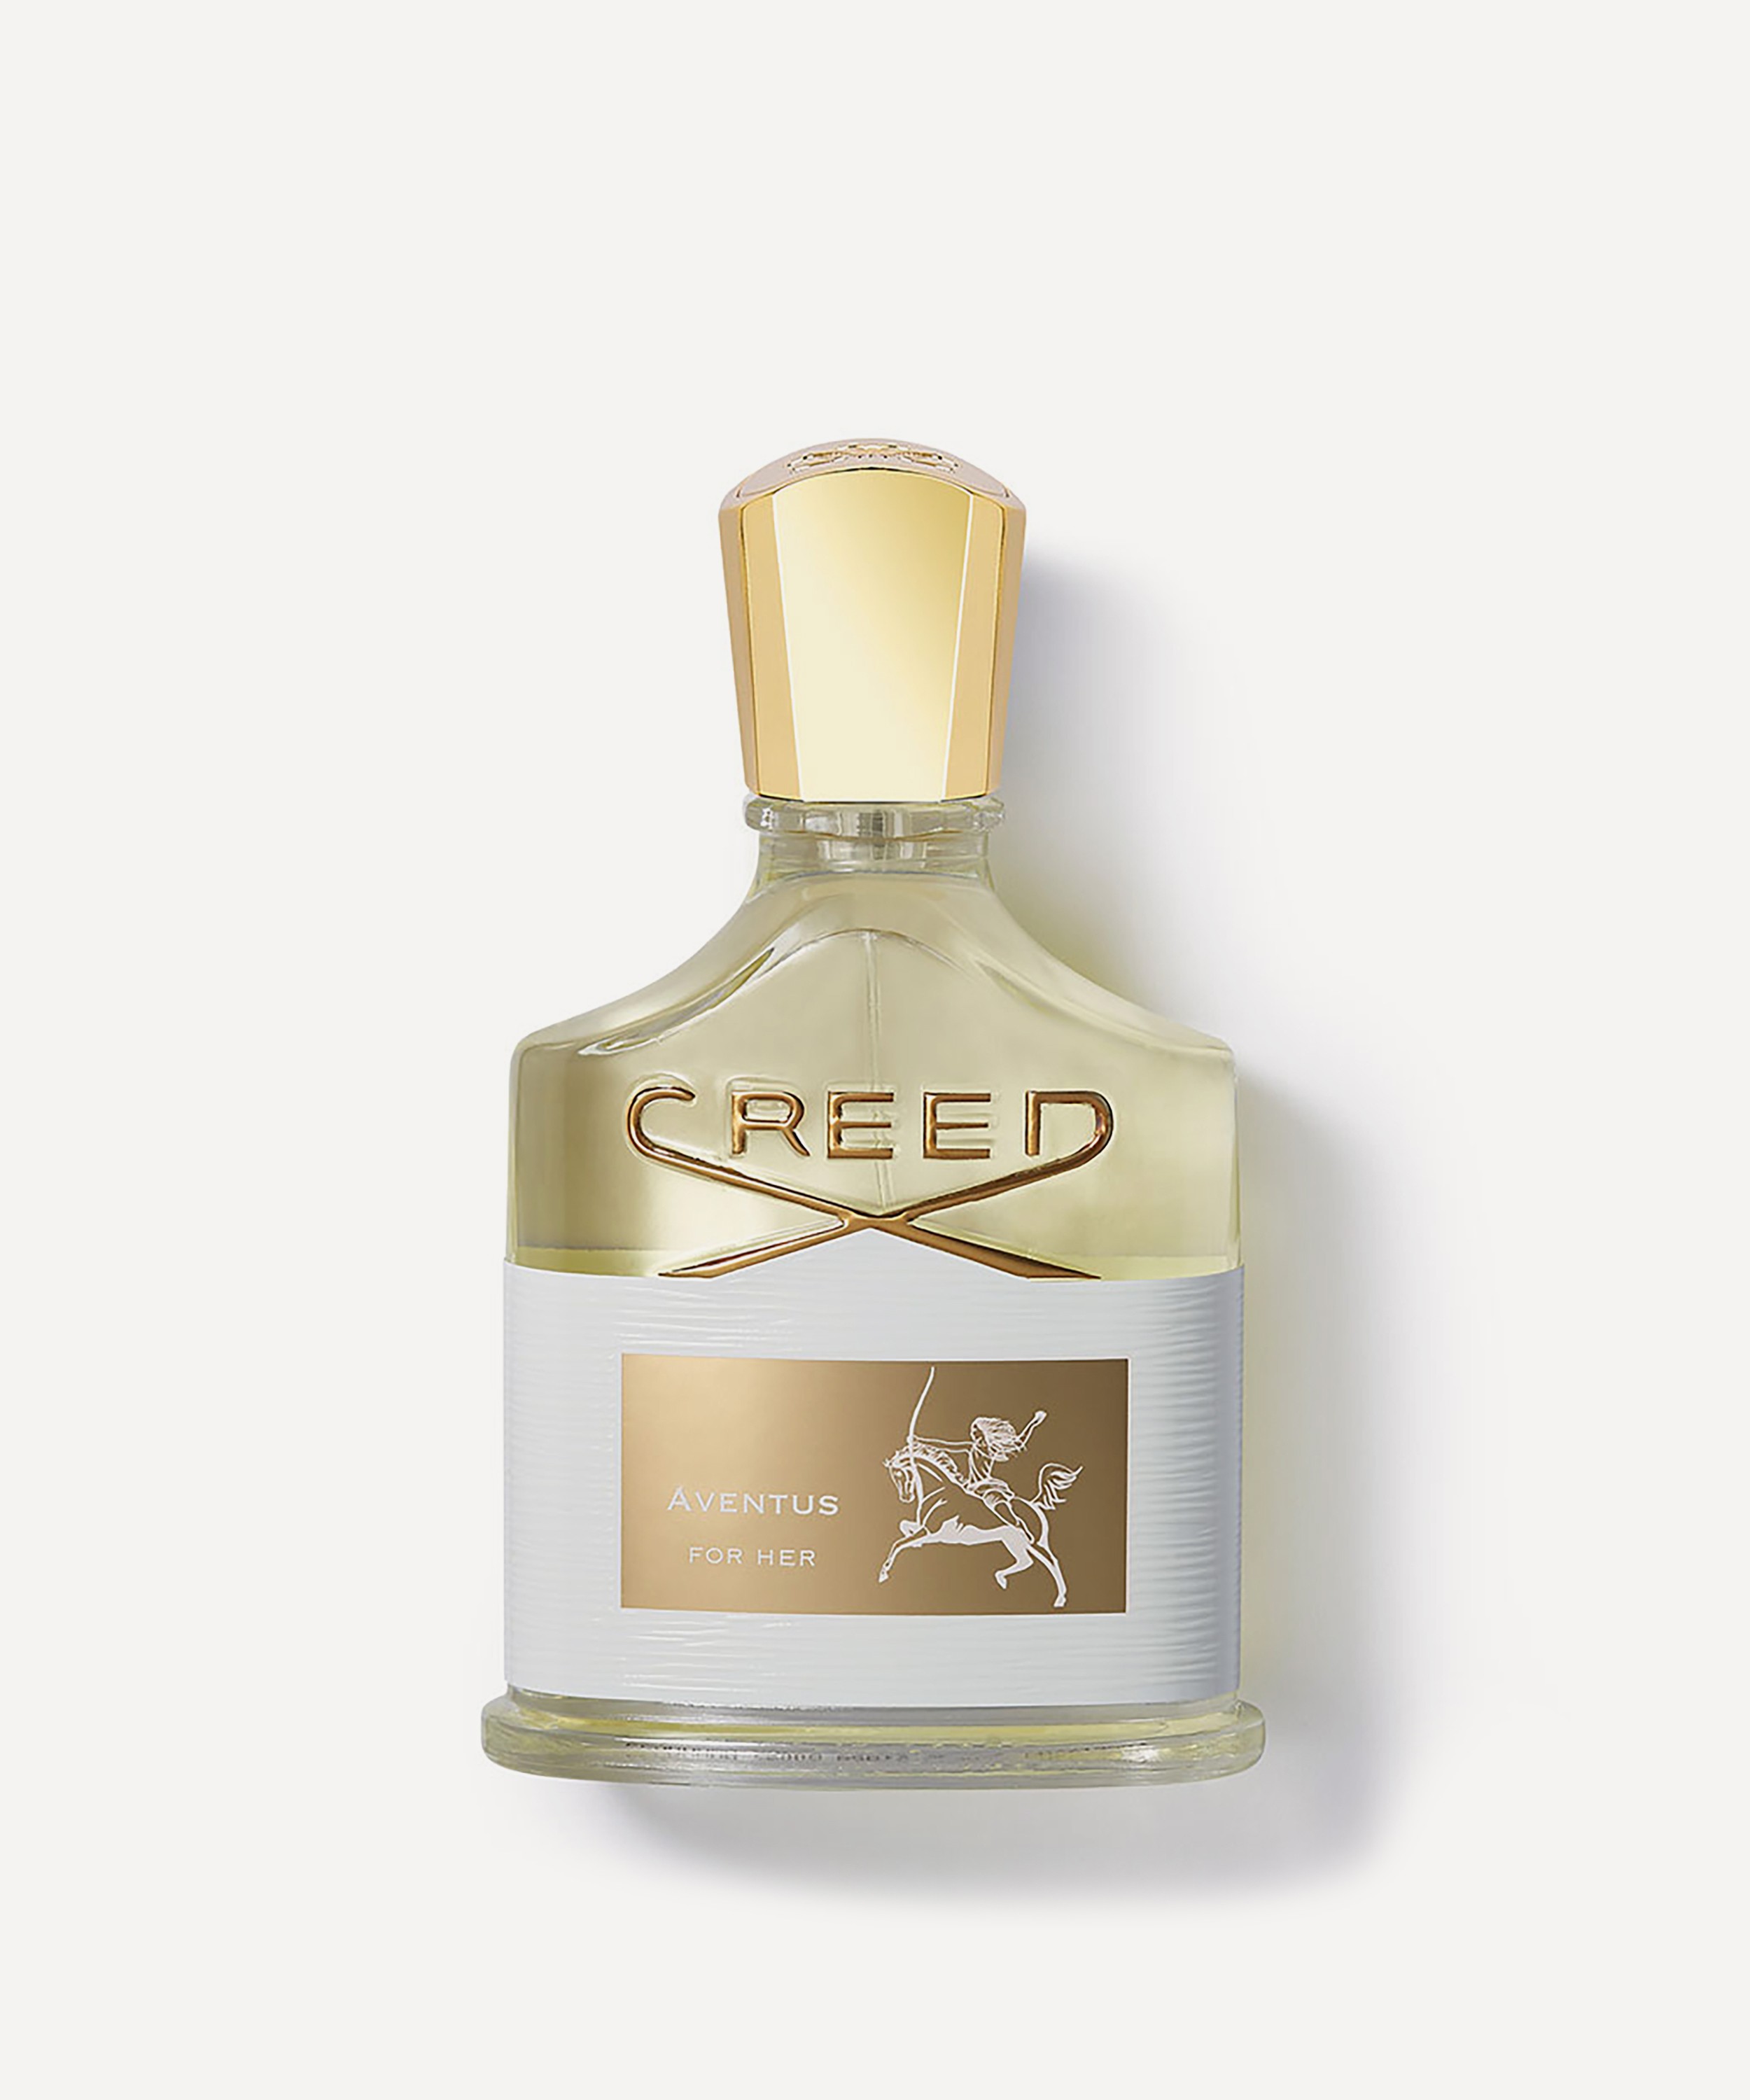 Creed - Aventus For Her Eau de Parfum 75ml